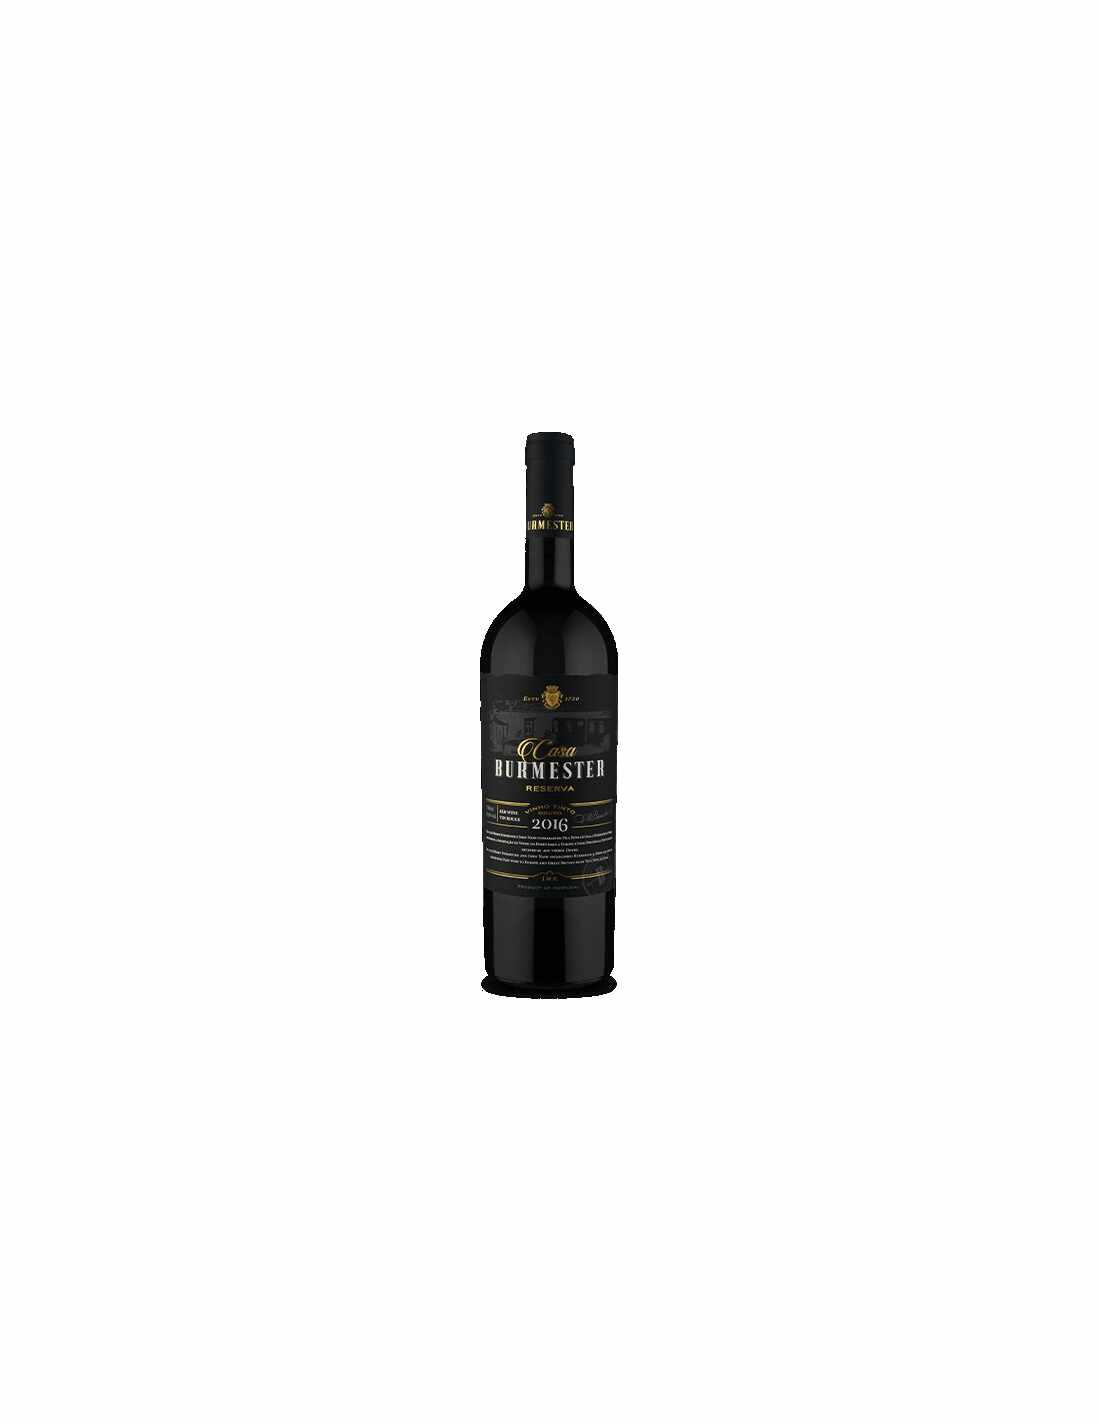 Vin rosu sec Casa Burmester Douro, 0.75L, 14.5% alc., Portugalia